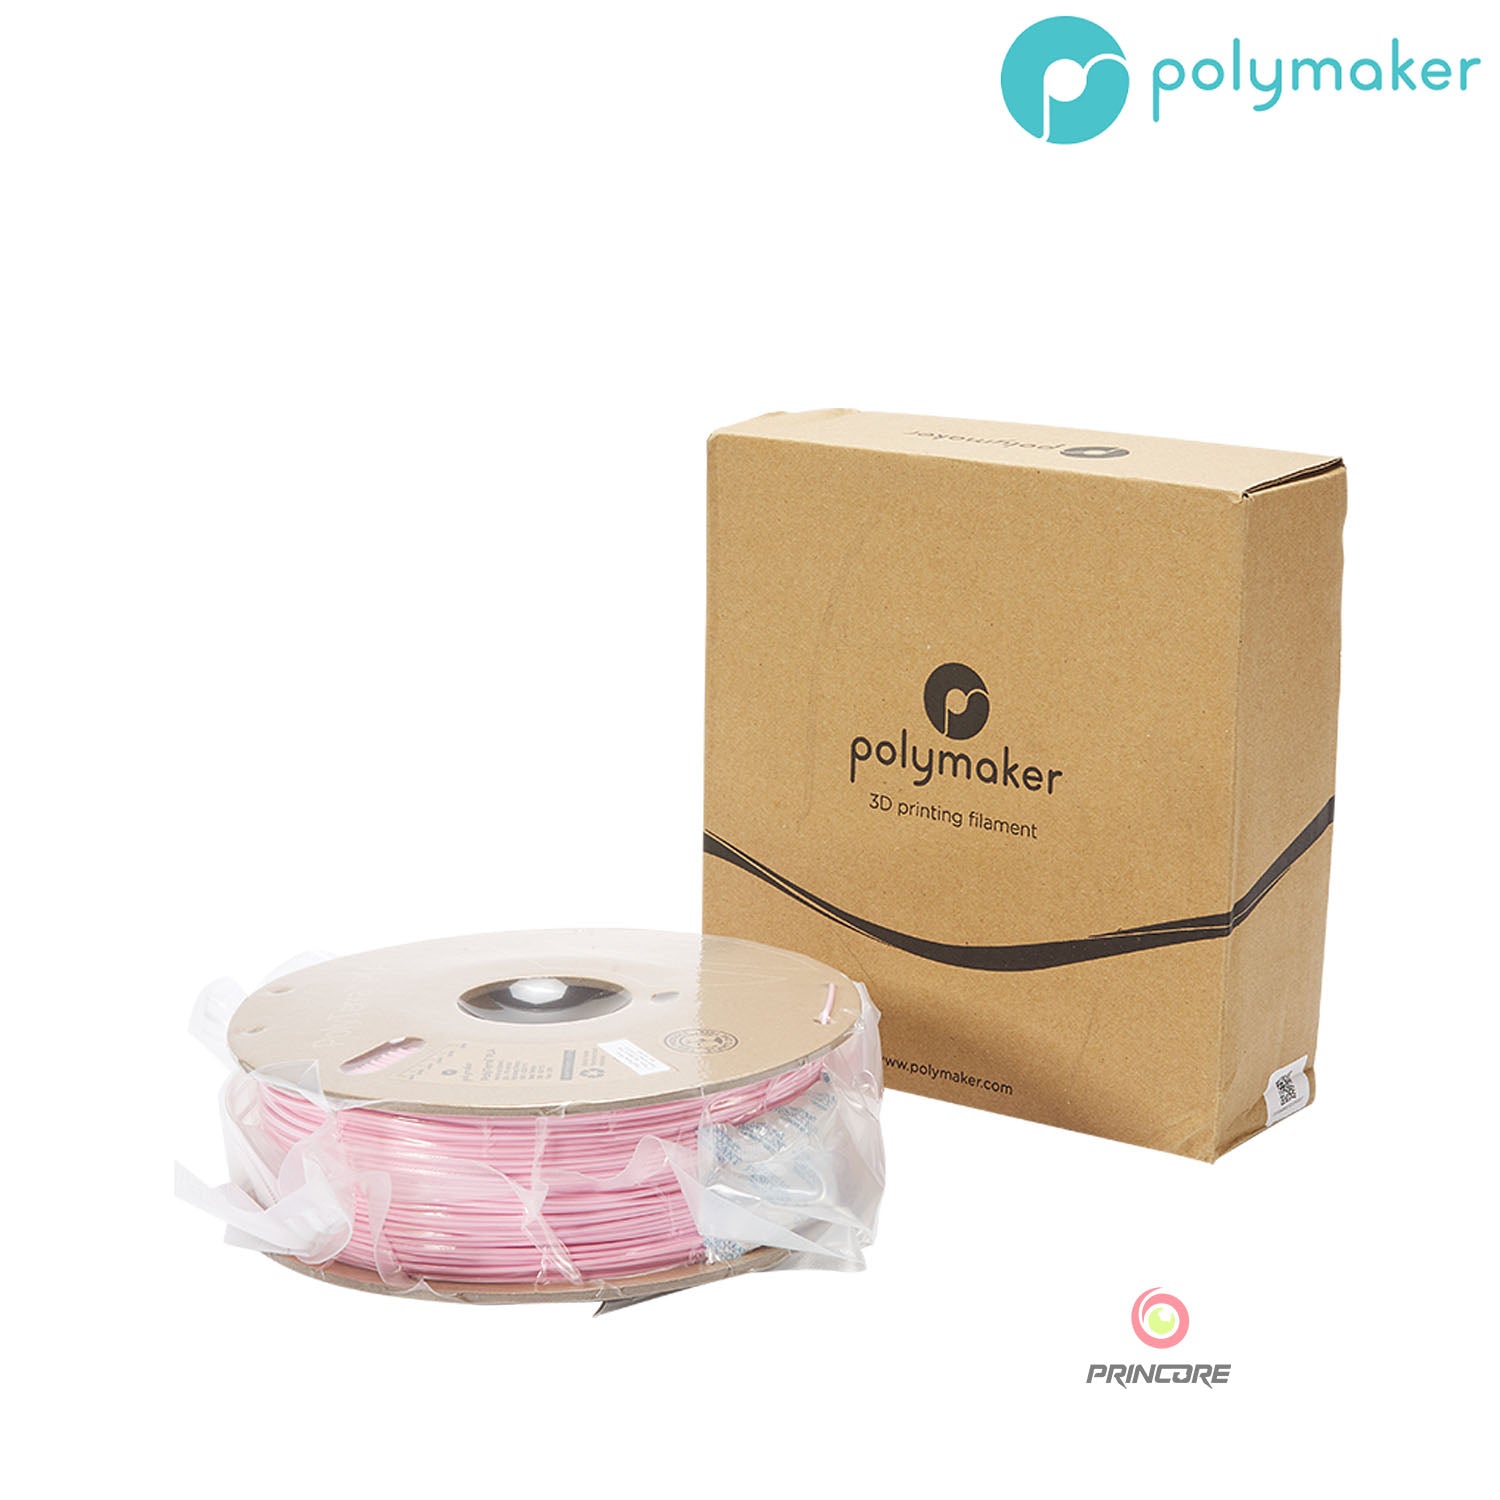 Polymaker PolyTerra™ PLA - Sakura Pink [1.75mm] (19,90€/Kg)